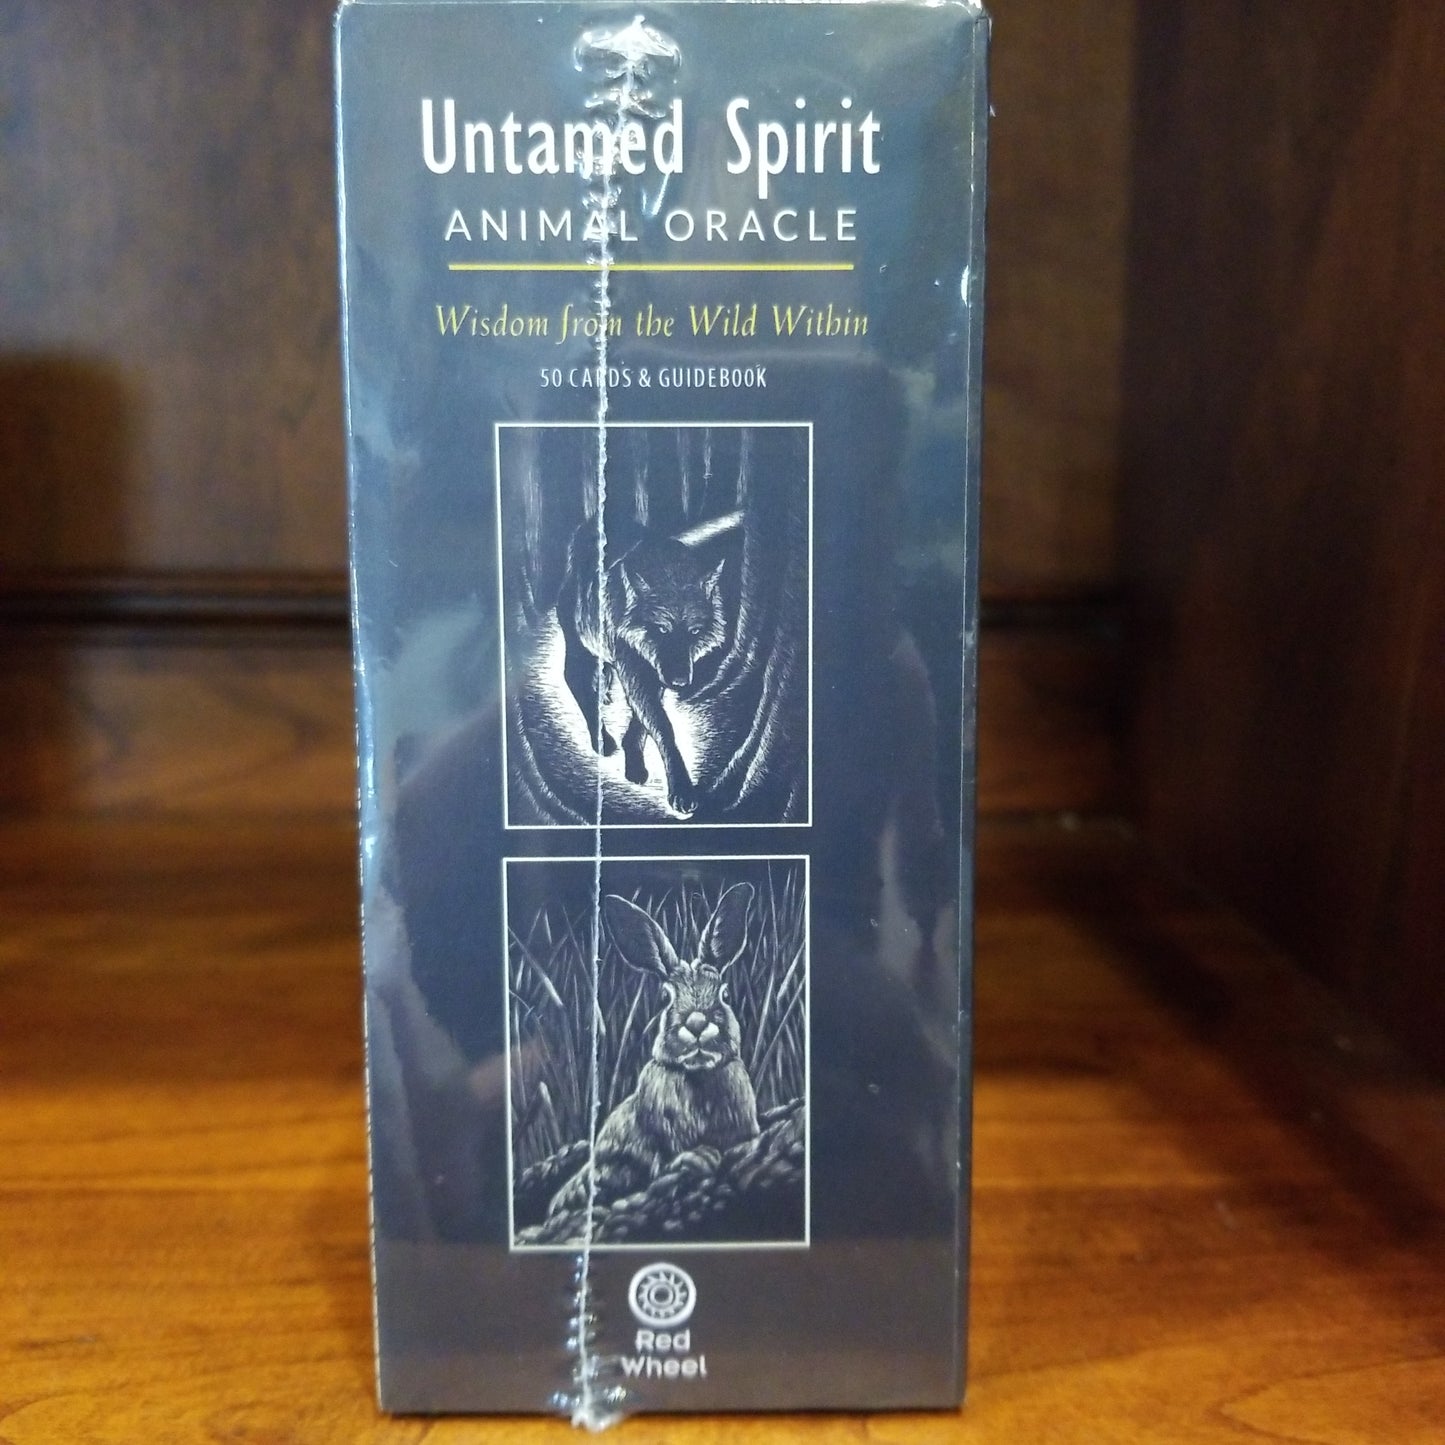 The Untamed Spirit Animal Oracle